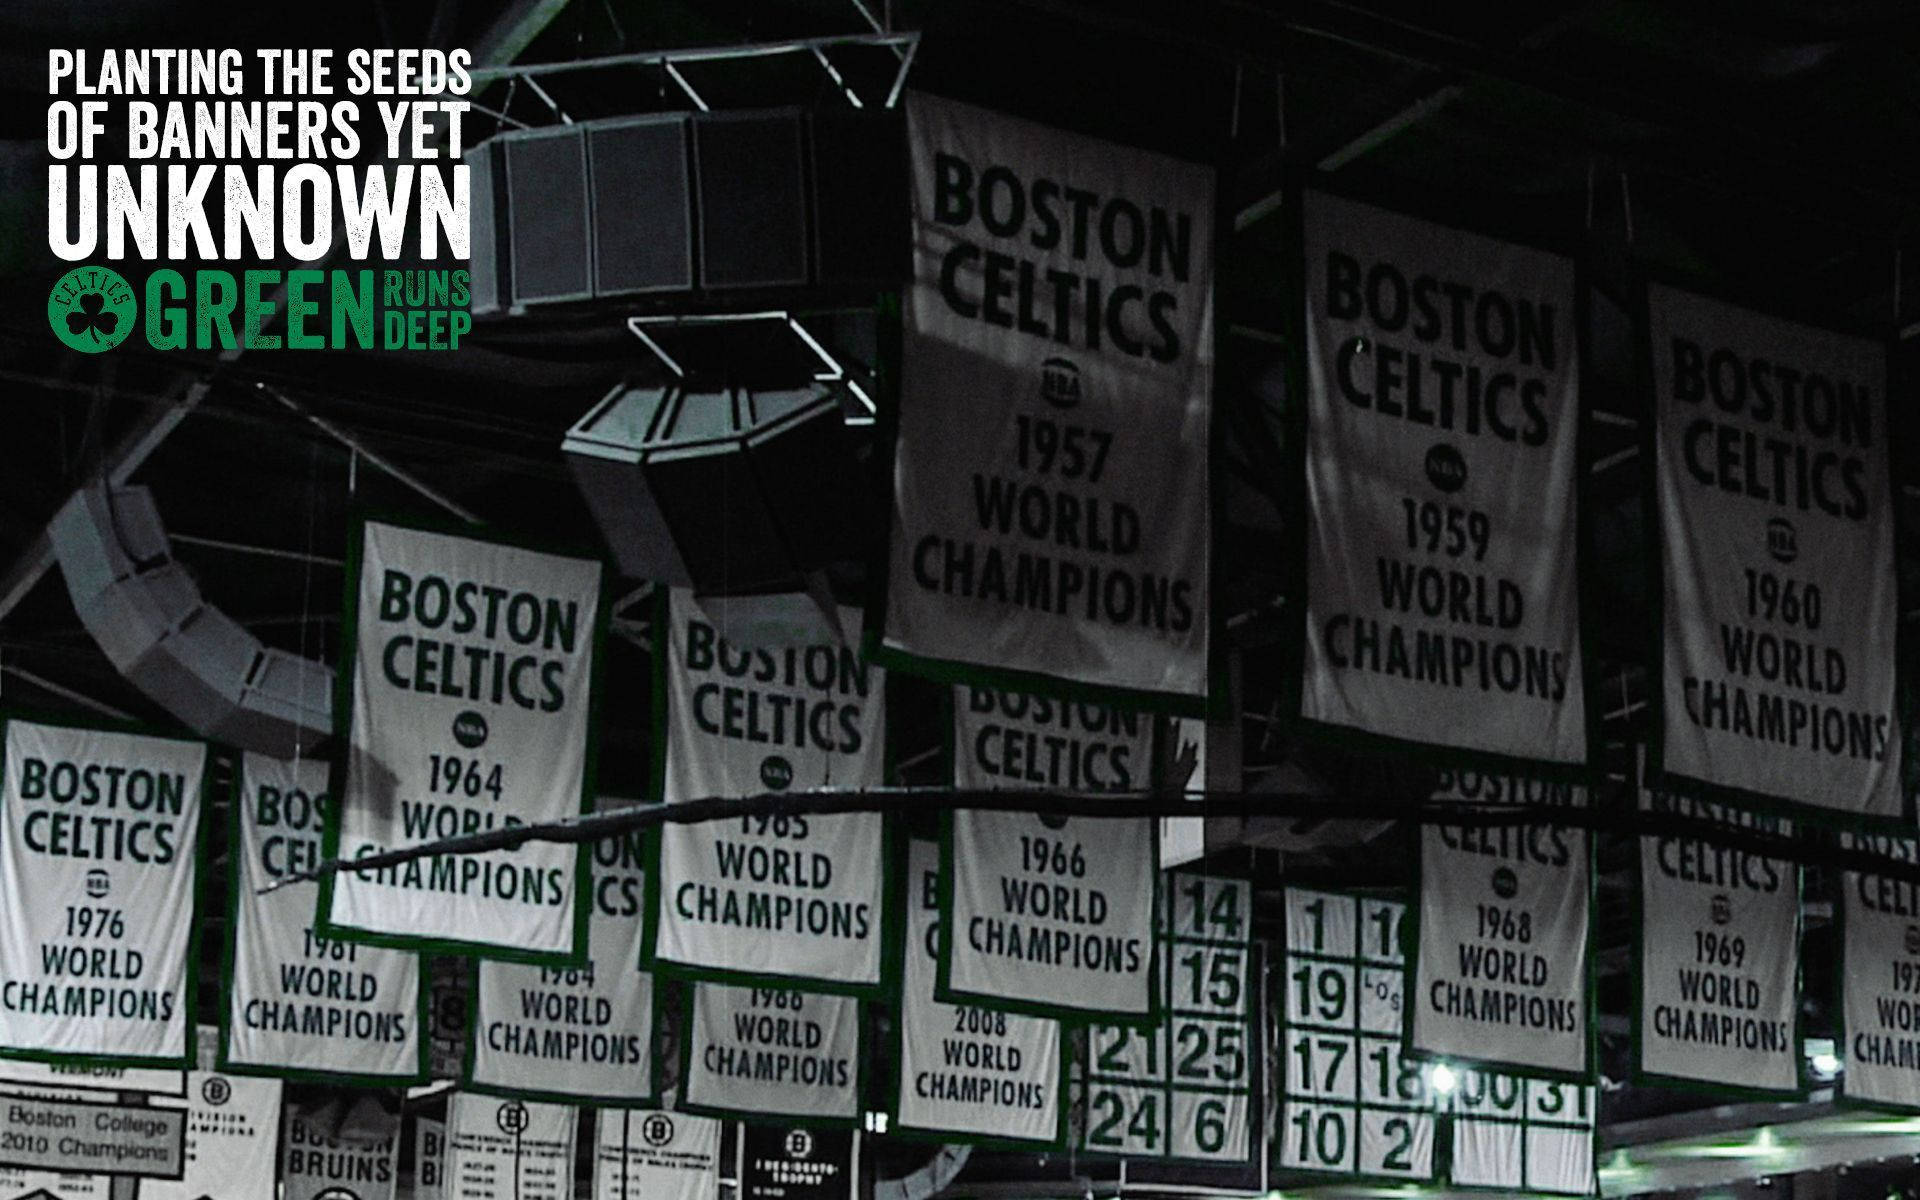 Boston Celtics 1959 World Champions Background